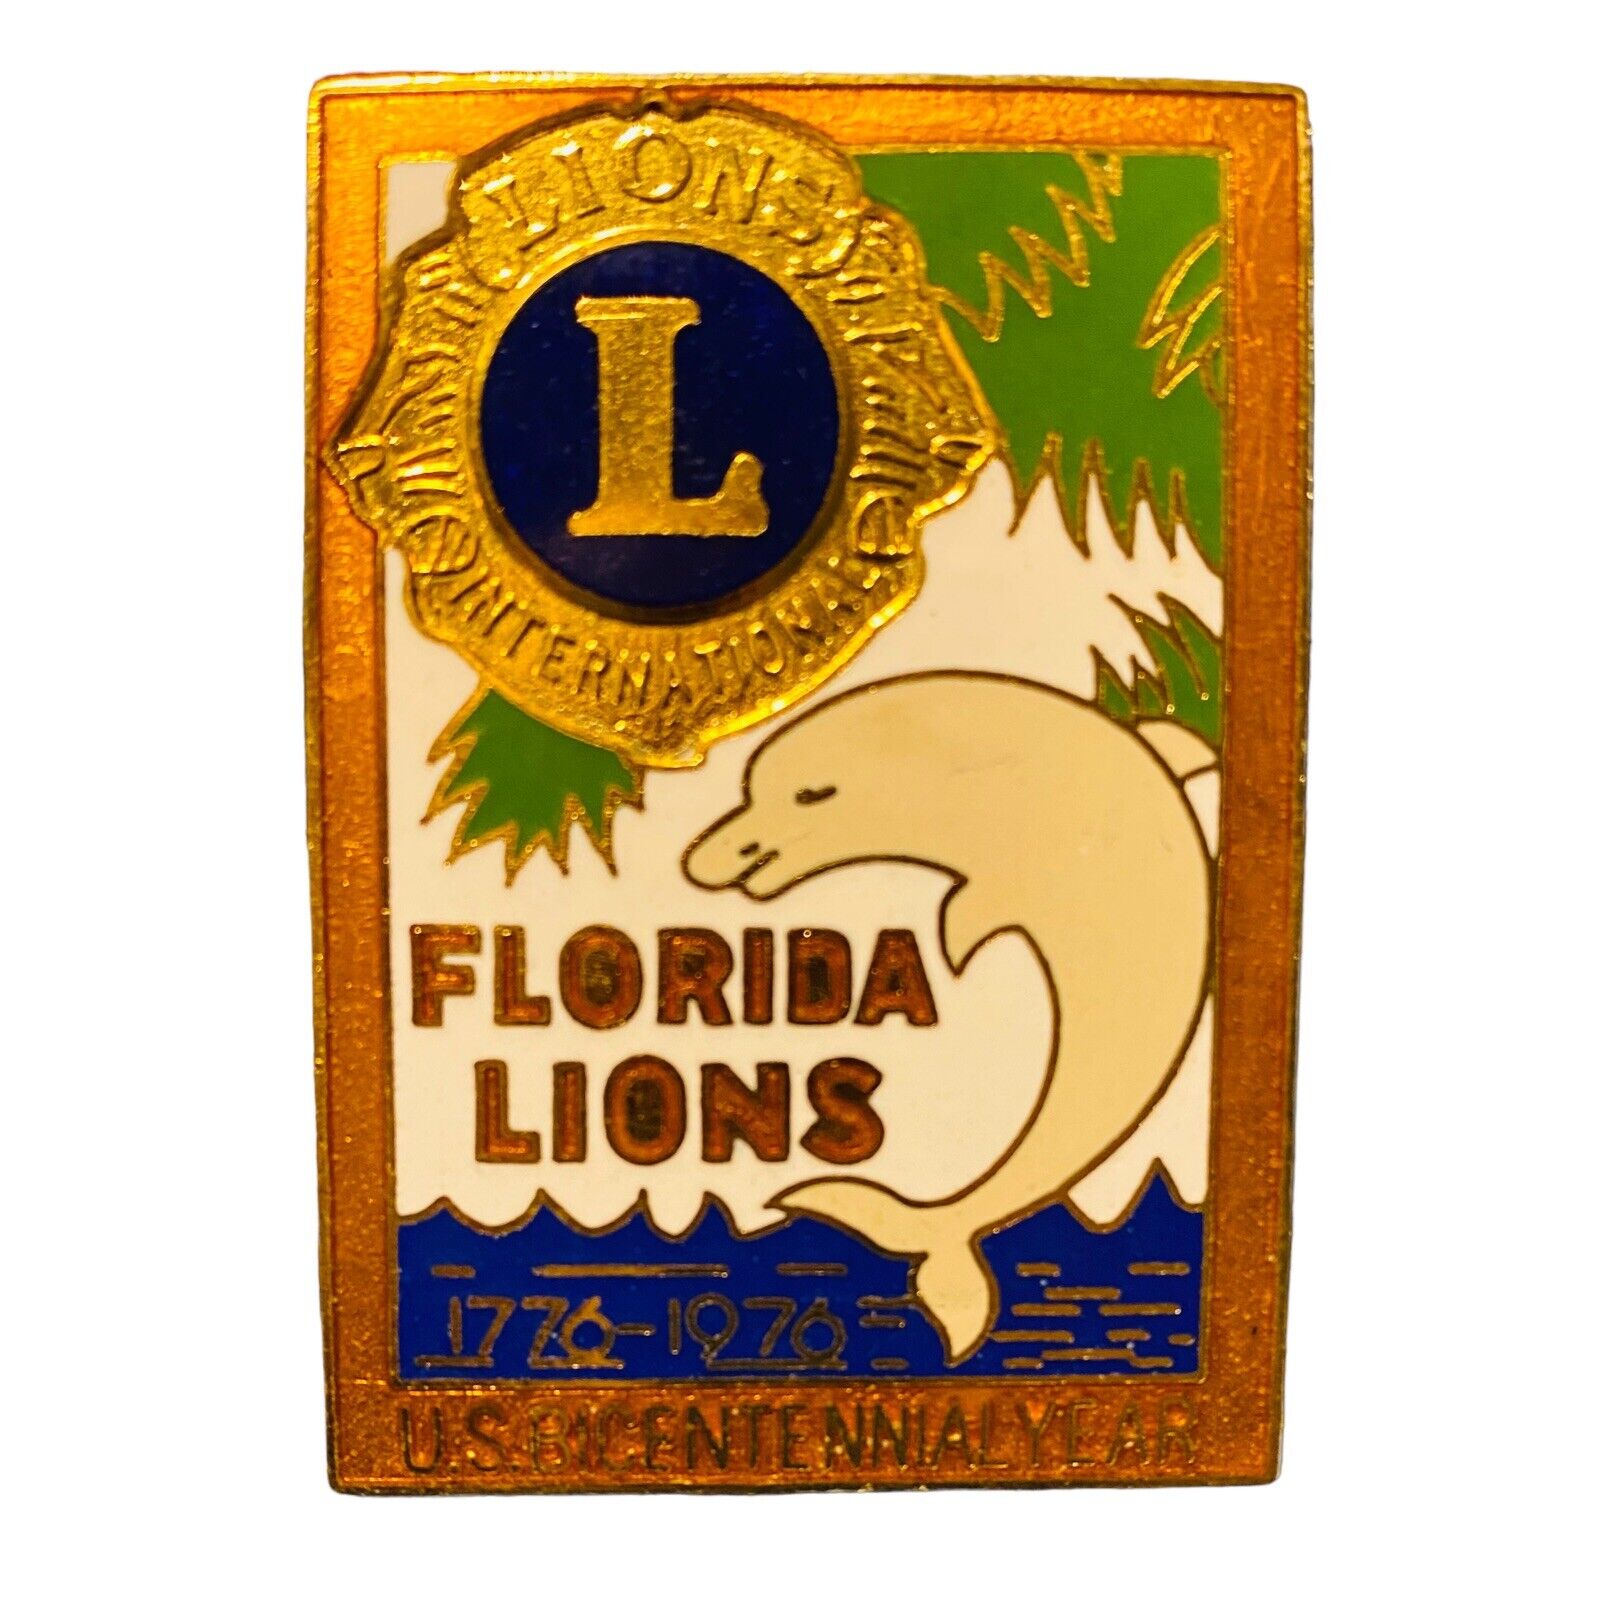 Vintage 1776-1976 US Bicentennial Year Florida Lions Club Lapel Pin Dolphin 375